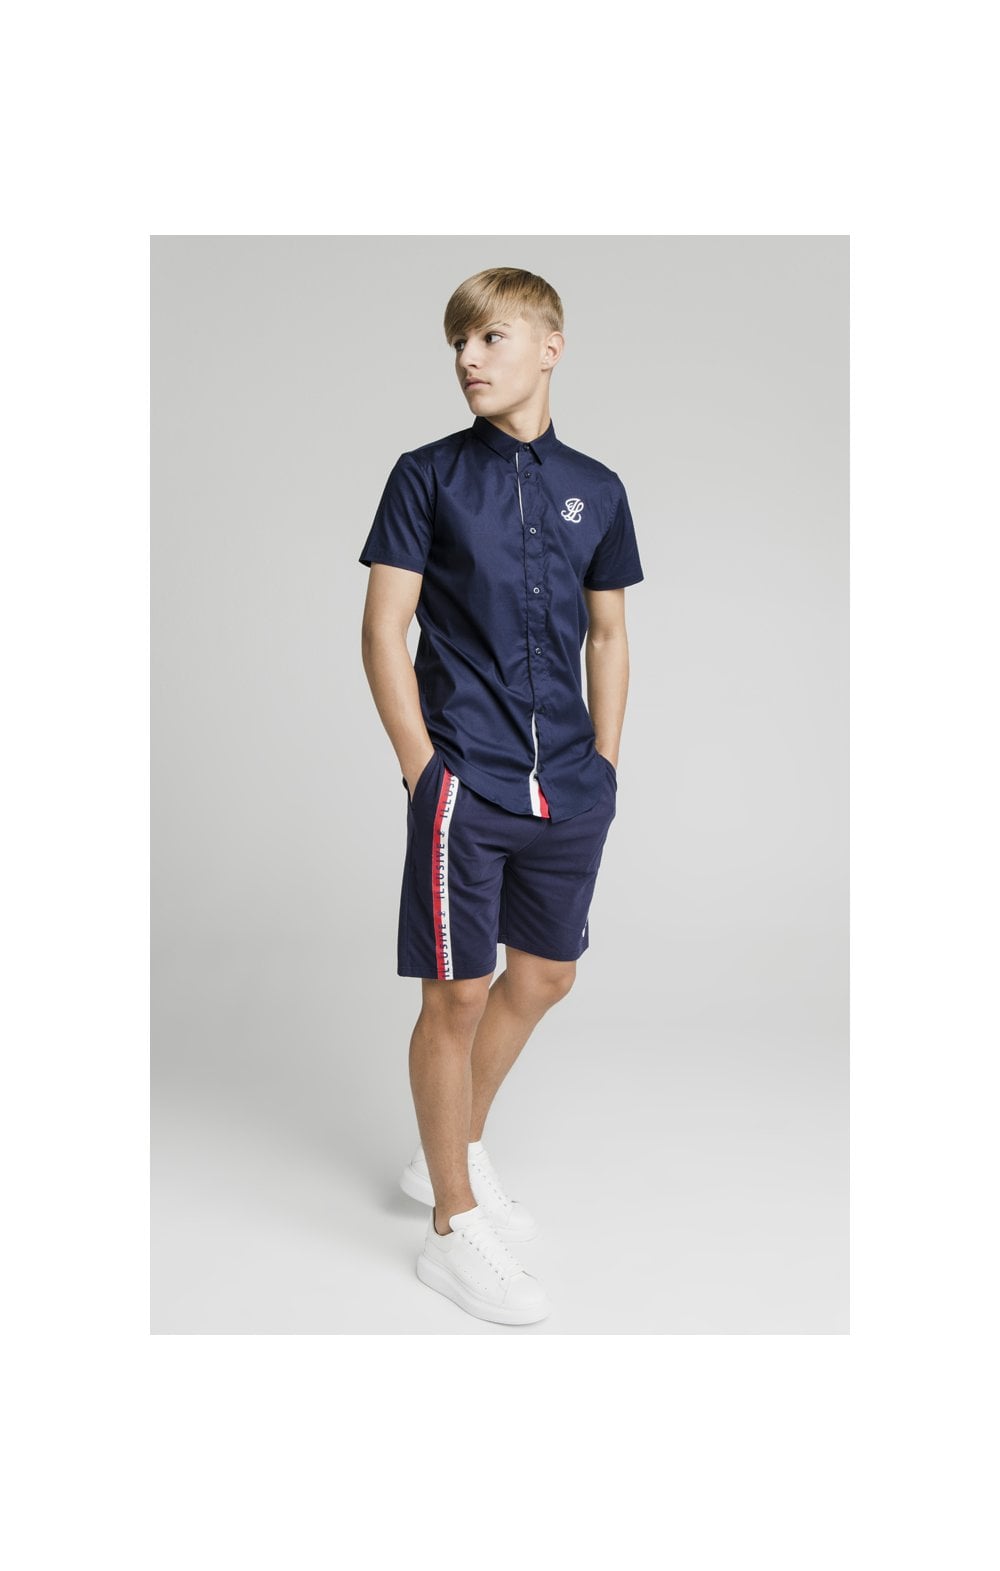 Illusive London Side Tape Jersey Shorts - Navy (5)